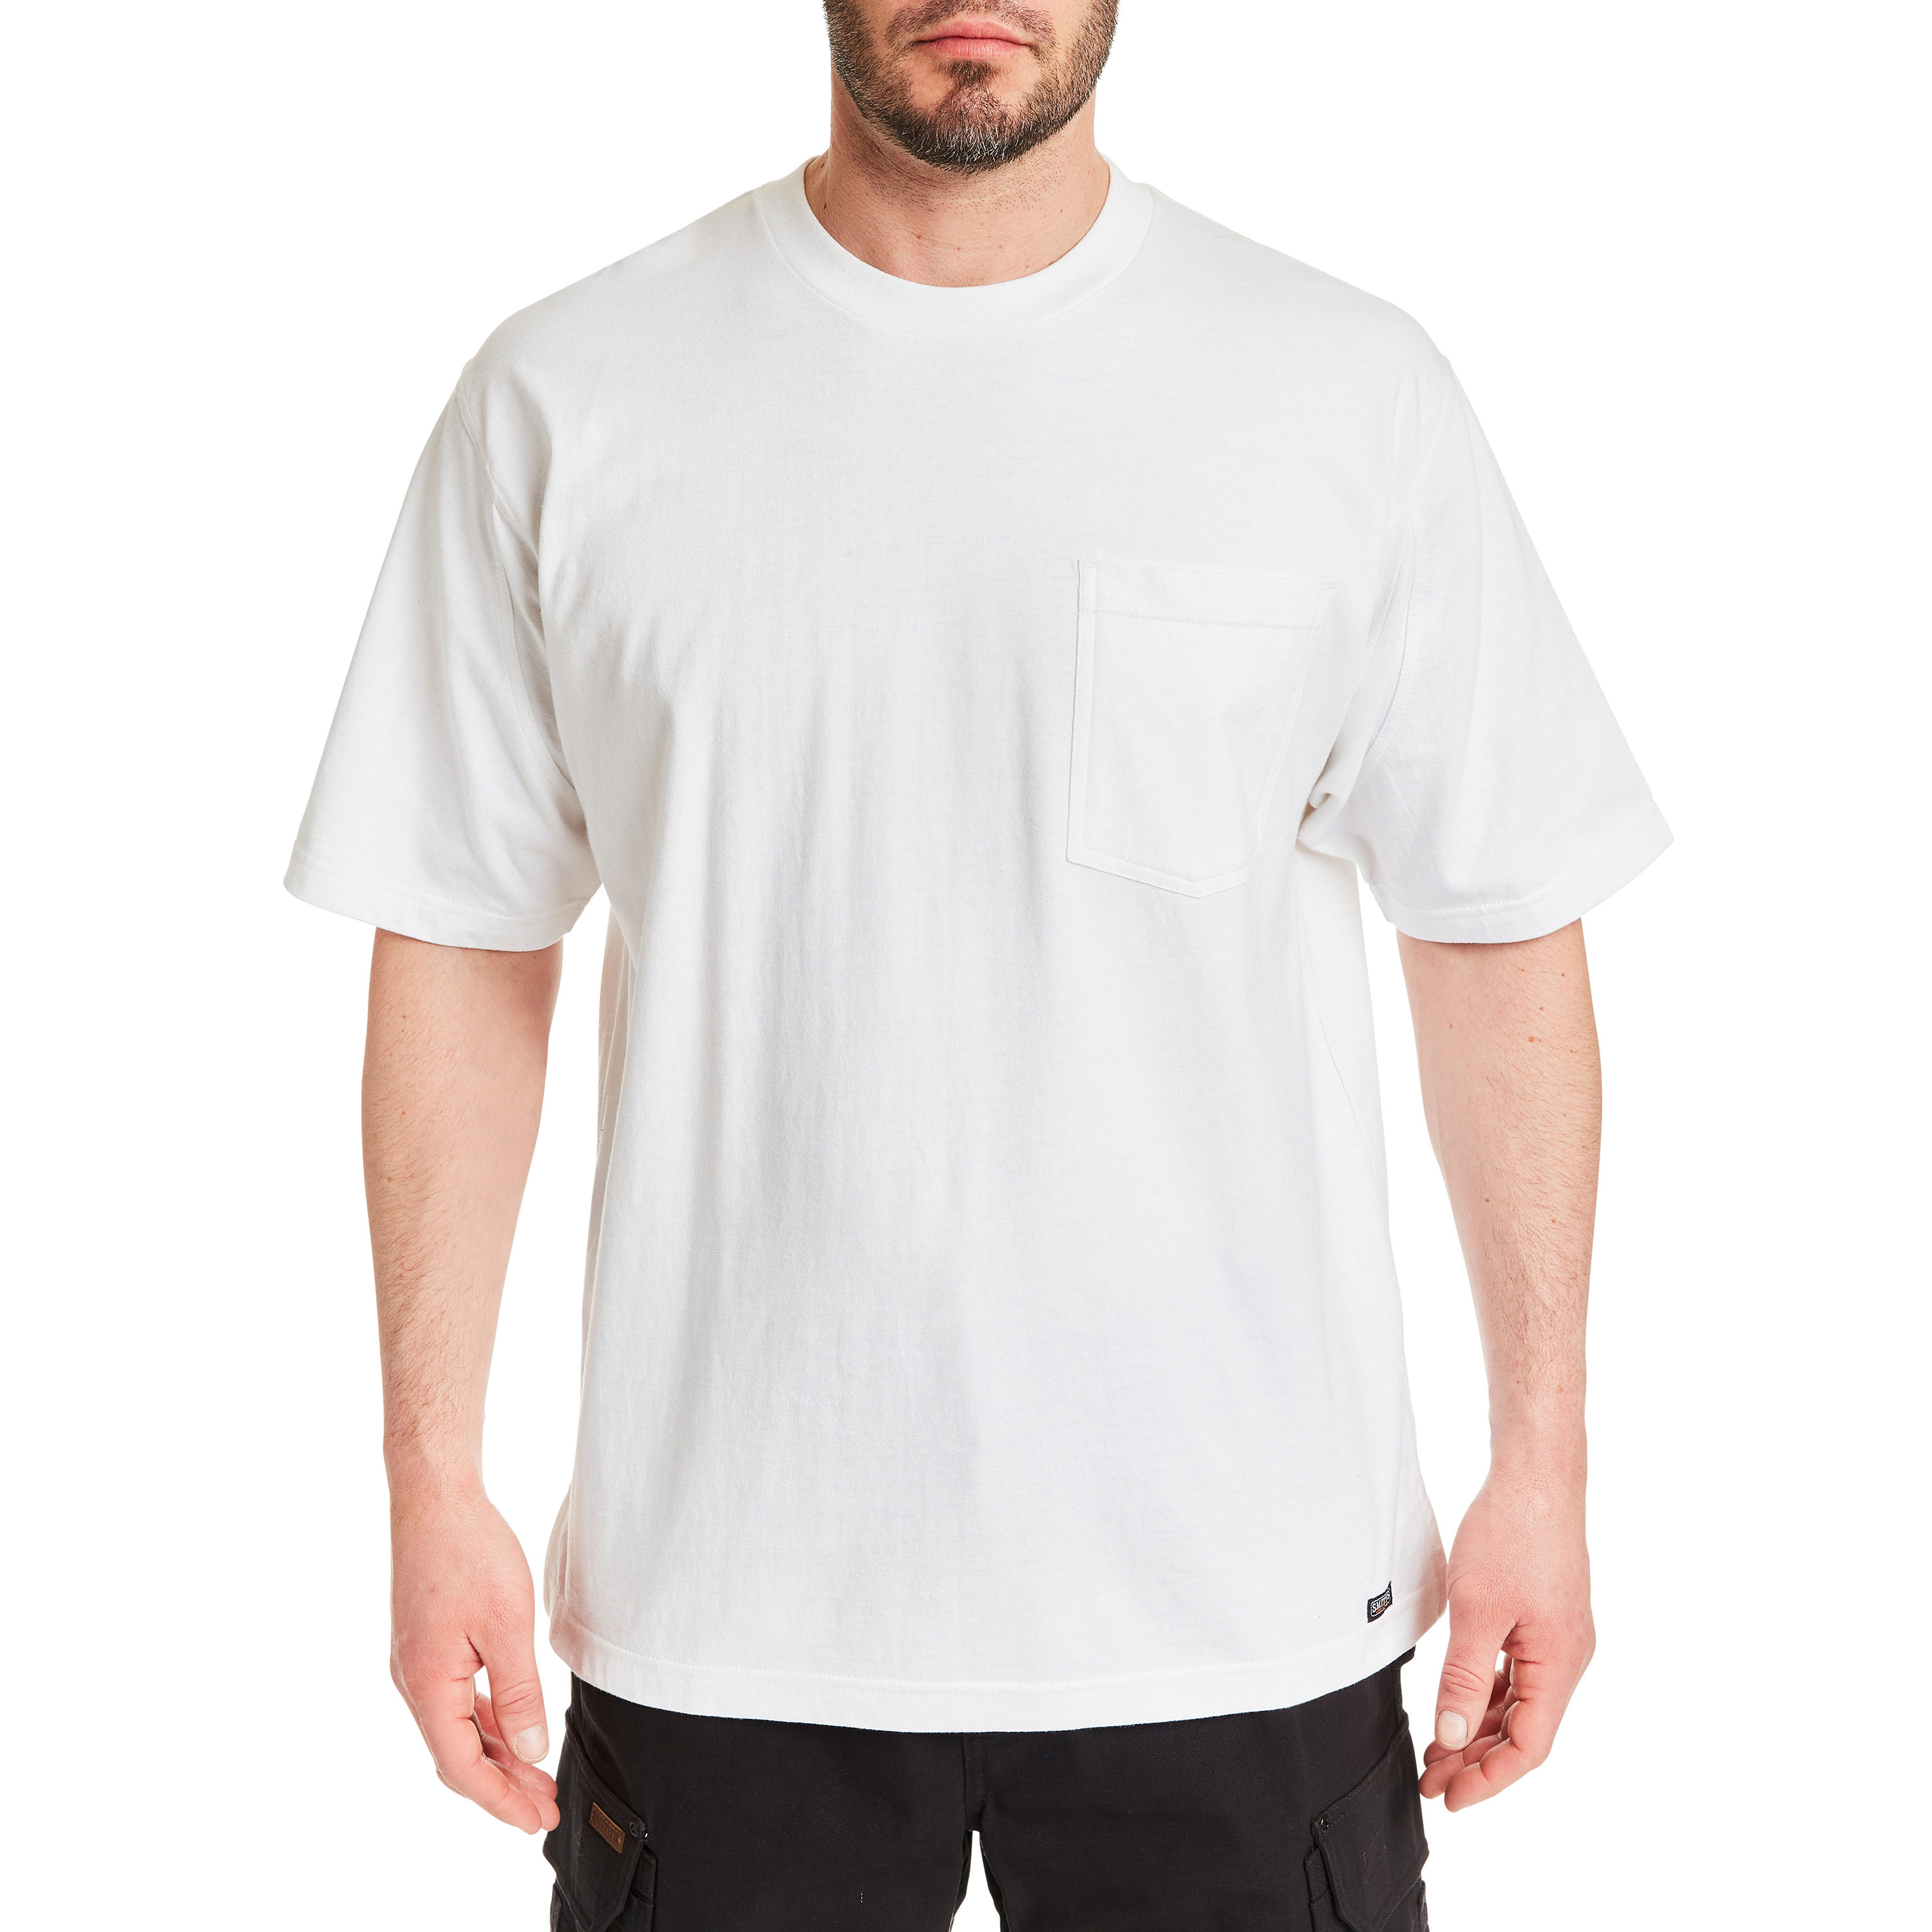 Xl Tall Tee Shirts | vlr.eng.br